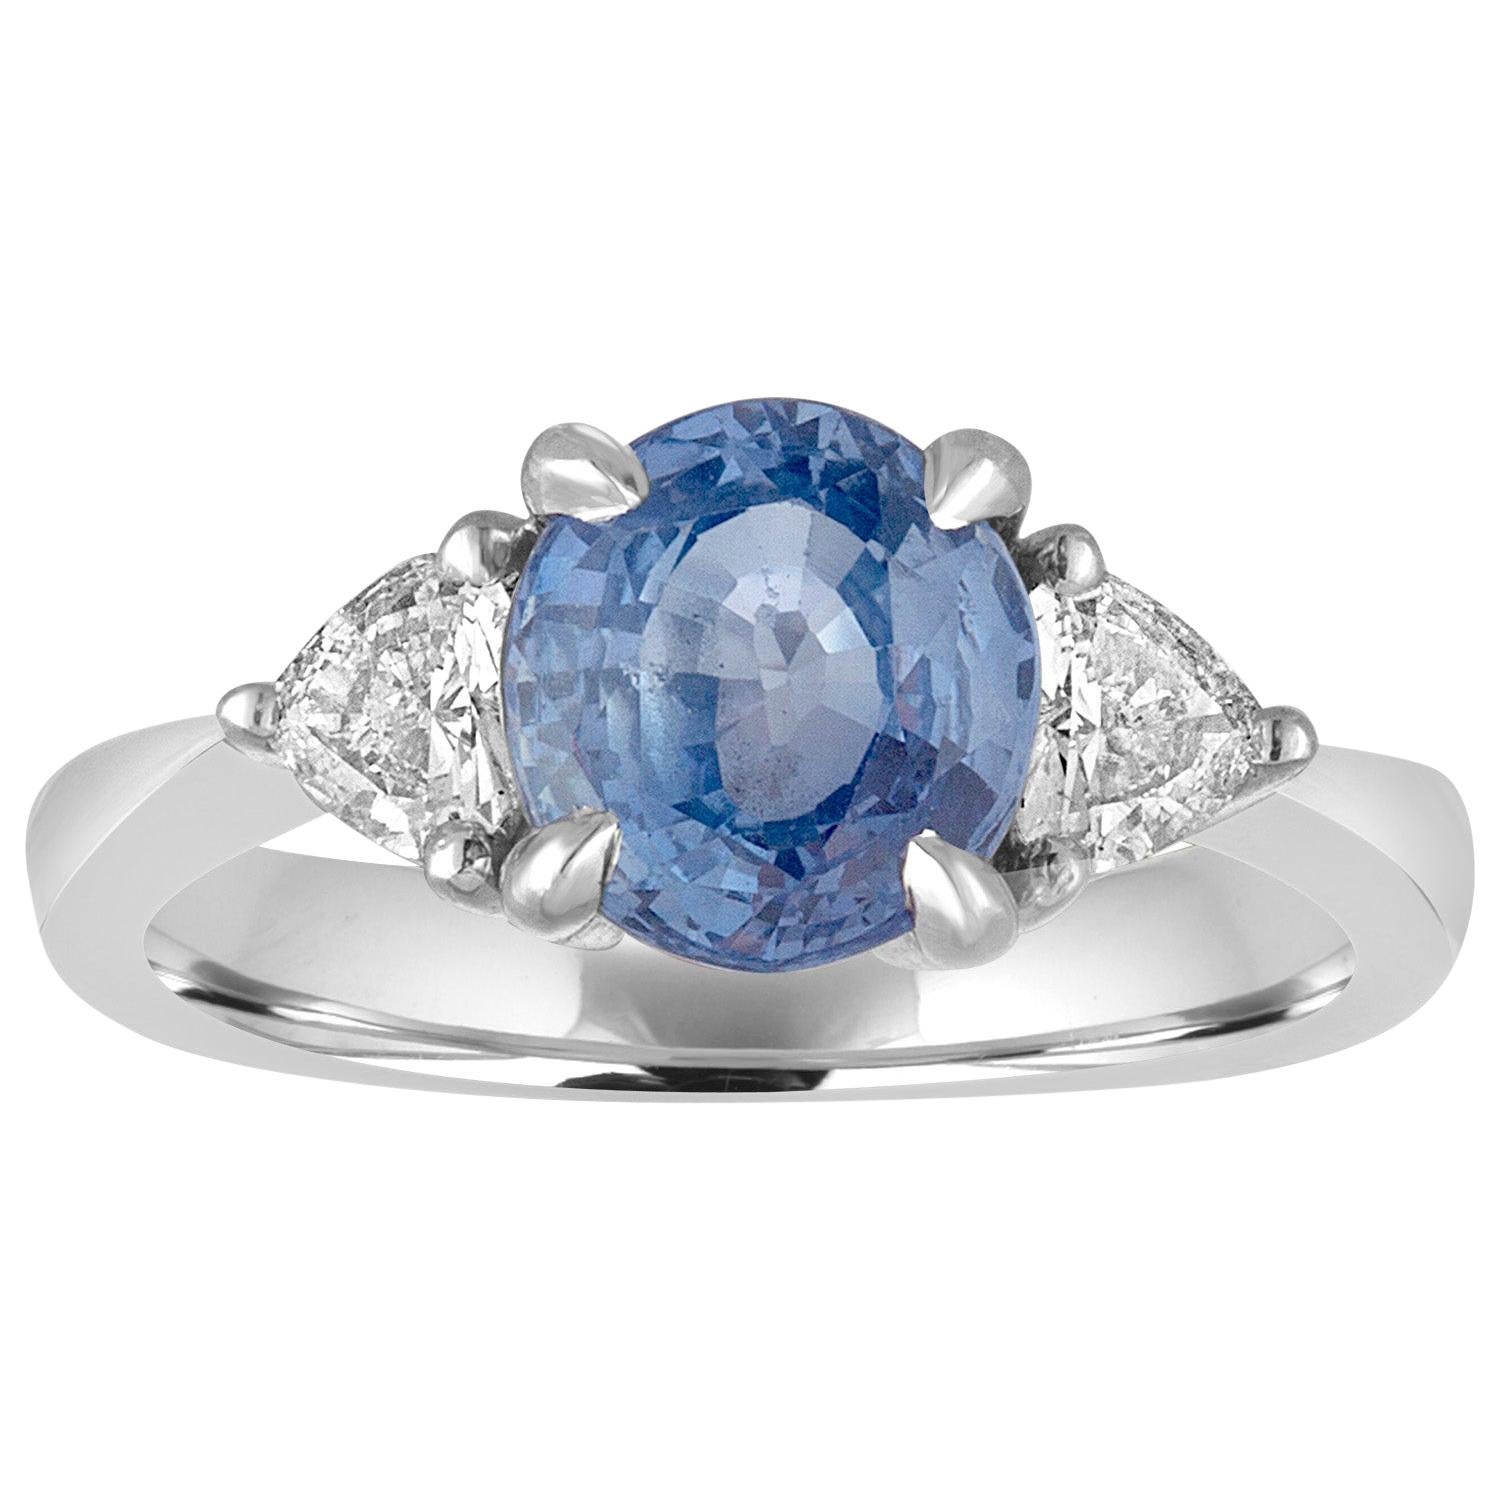 AGL & IGI Certified No Heat 2.44 Carat Oval Blue Sapphire Diamond Gold Ring For Sale